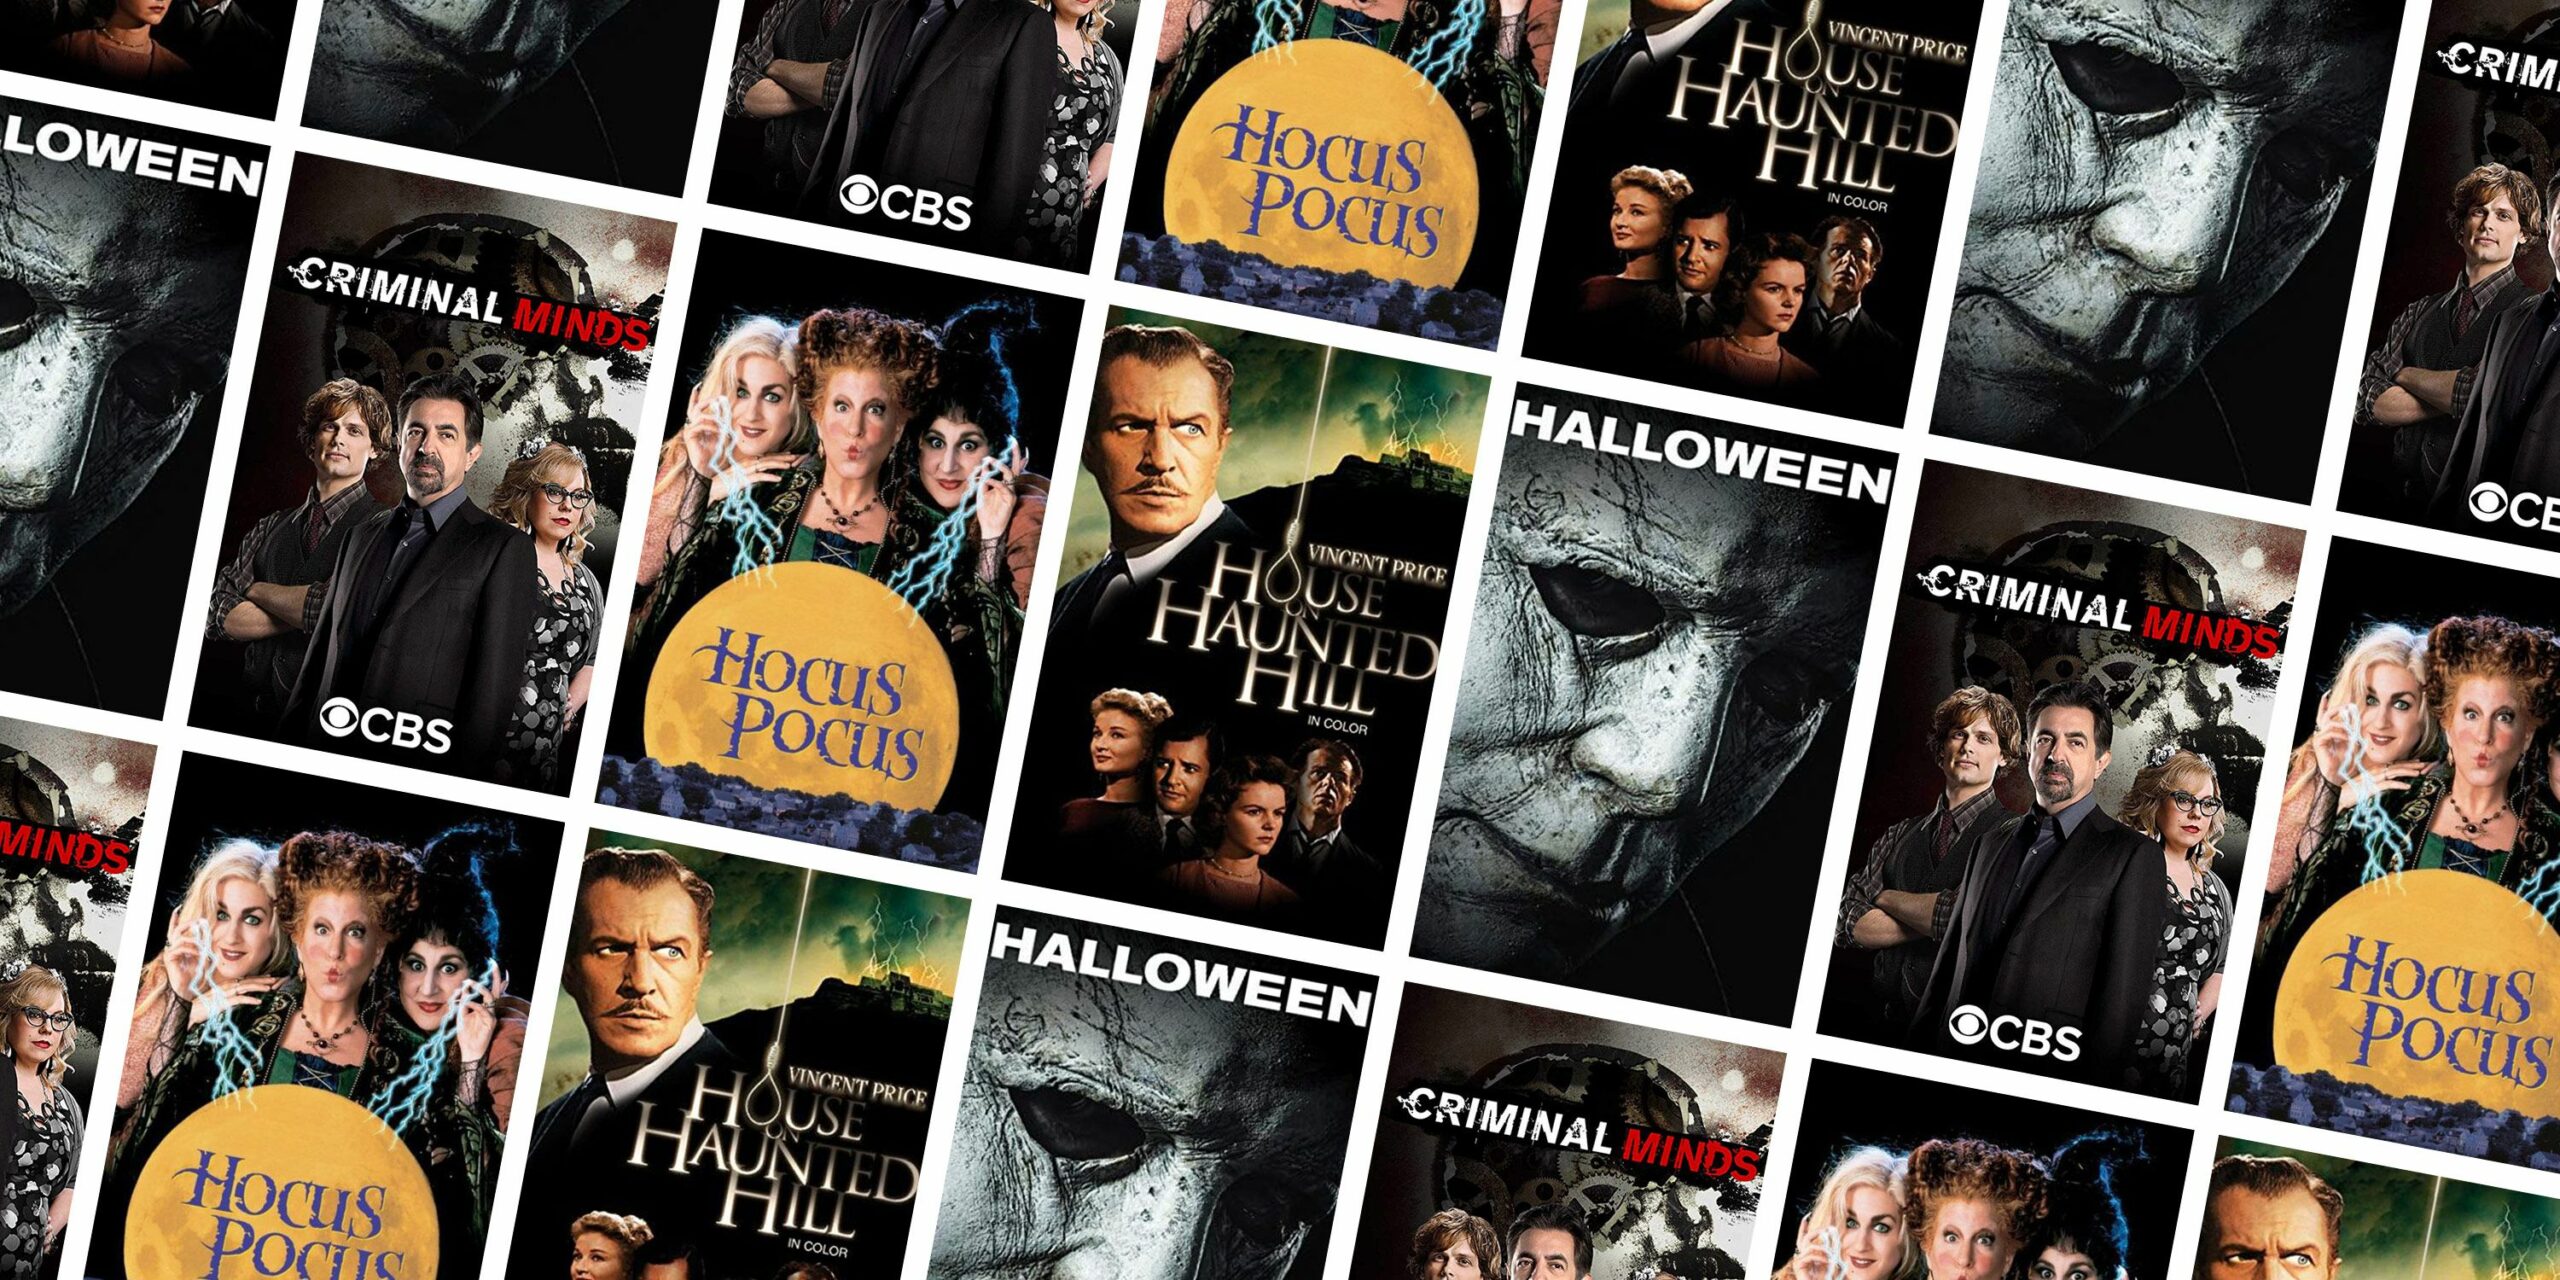 Enjoy 15 Best Halloween Movies During the Spooky Season